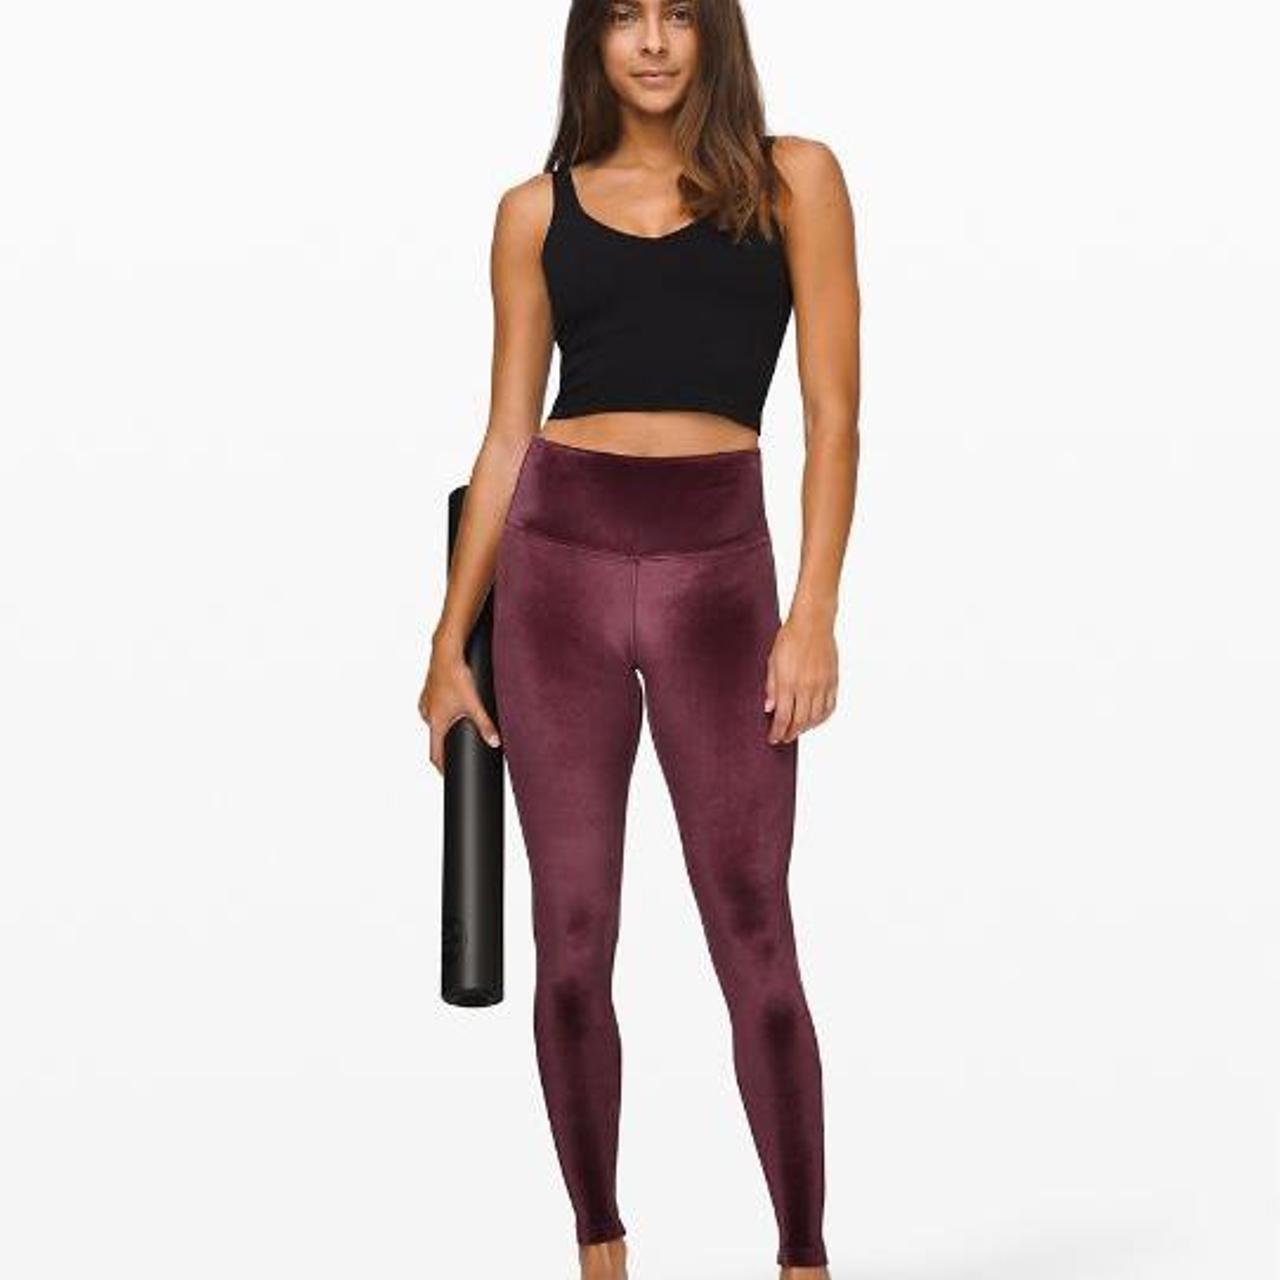 Lululemon purple velour leggings - rare lululemons-... - Depop